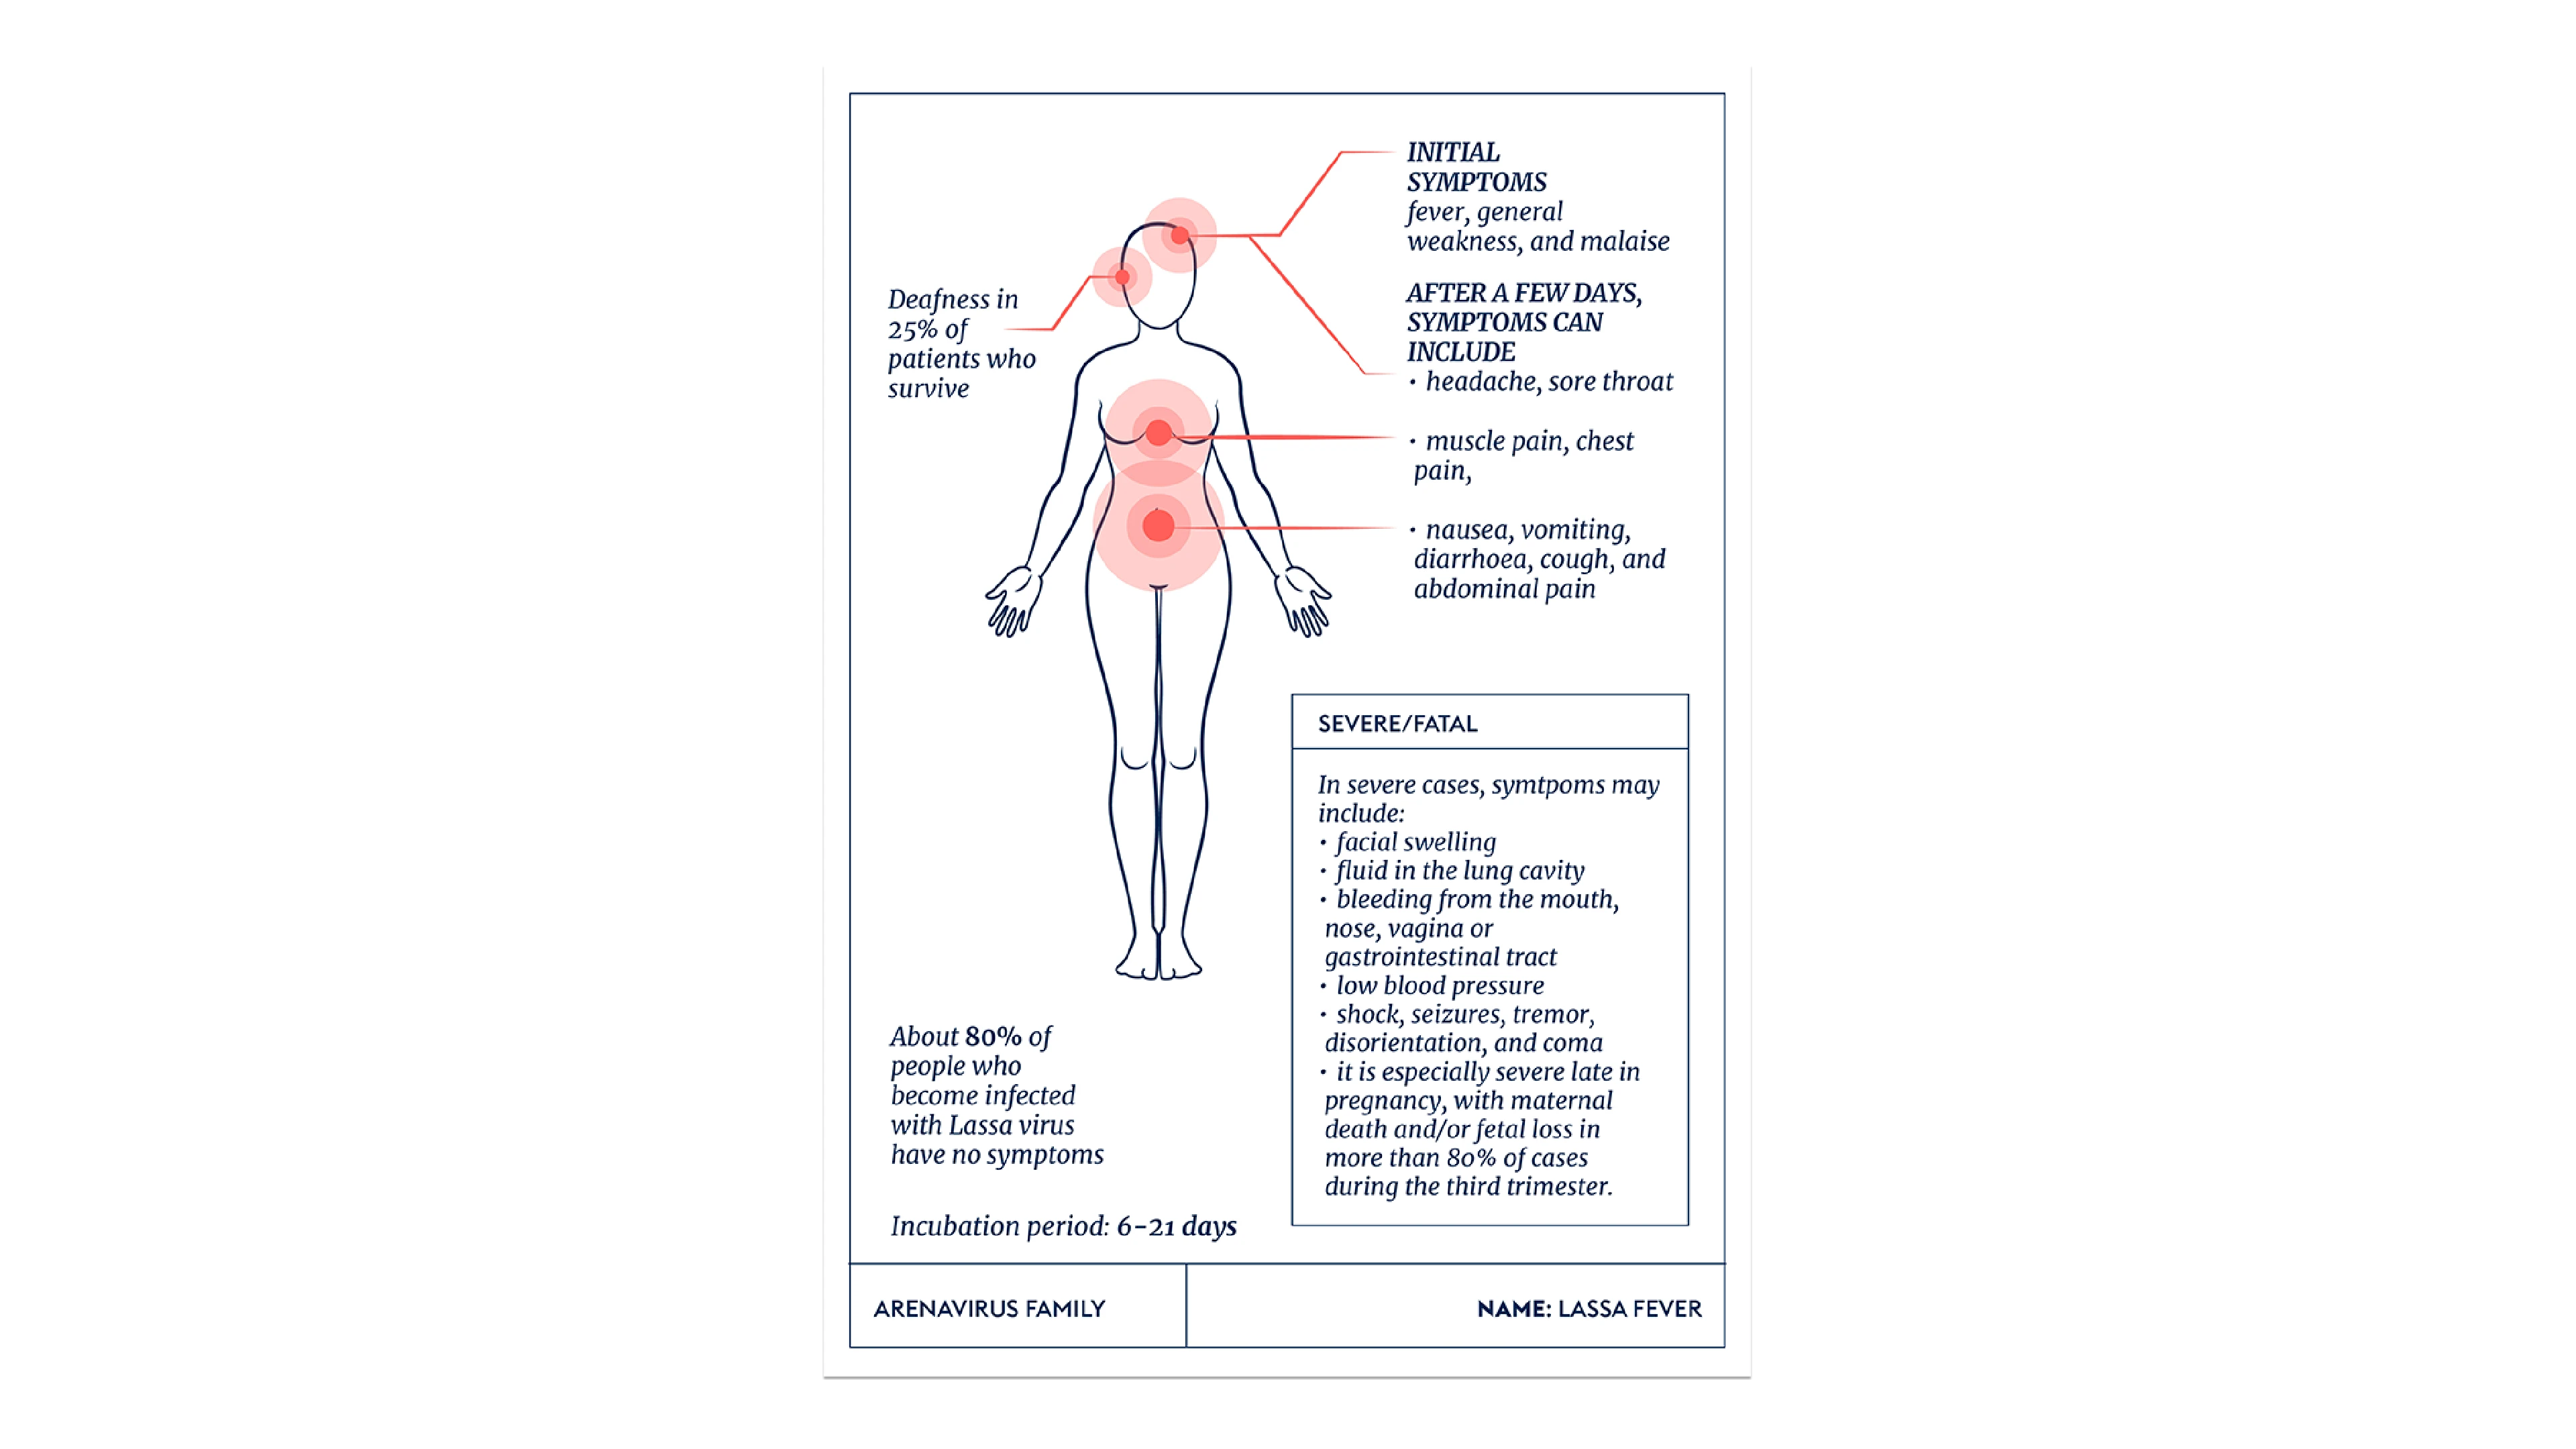 illustration showing symptoms of Lassa fever